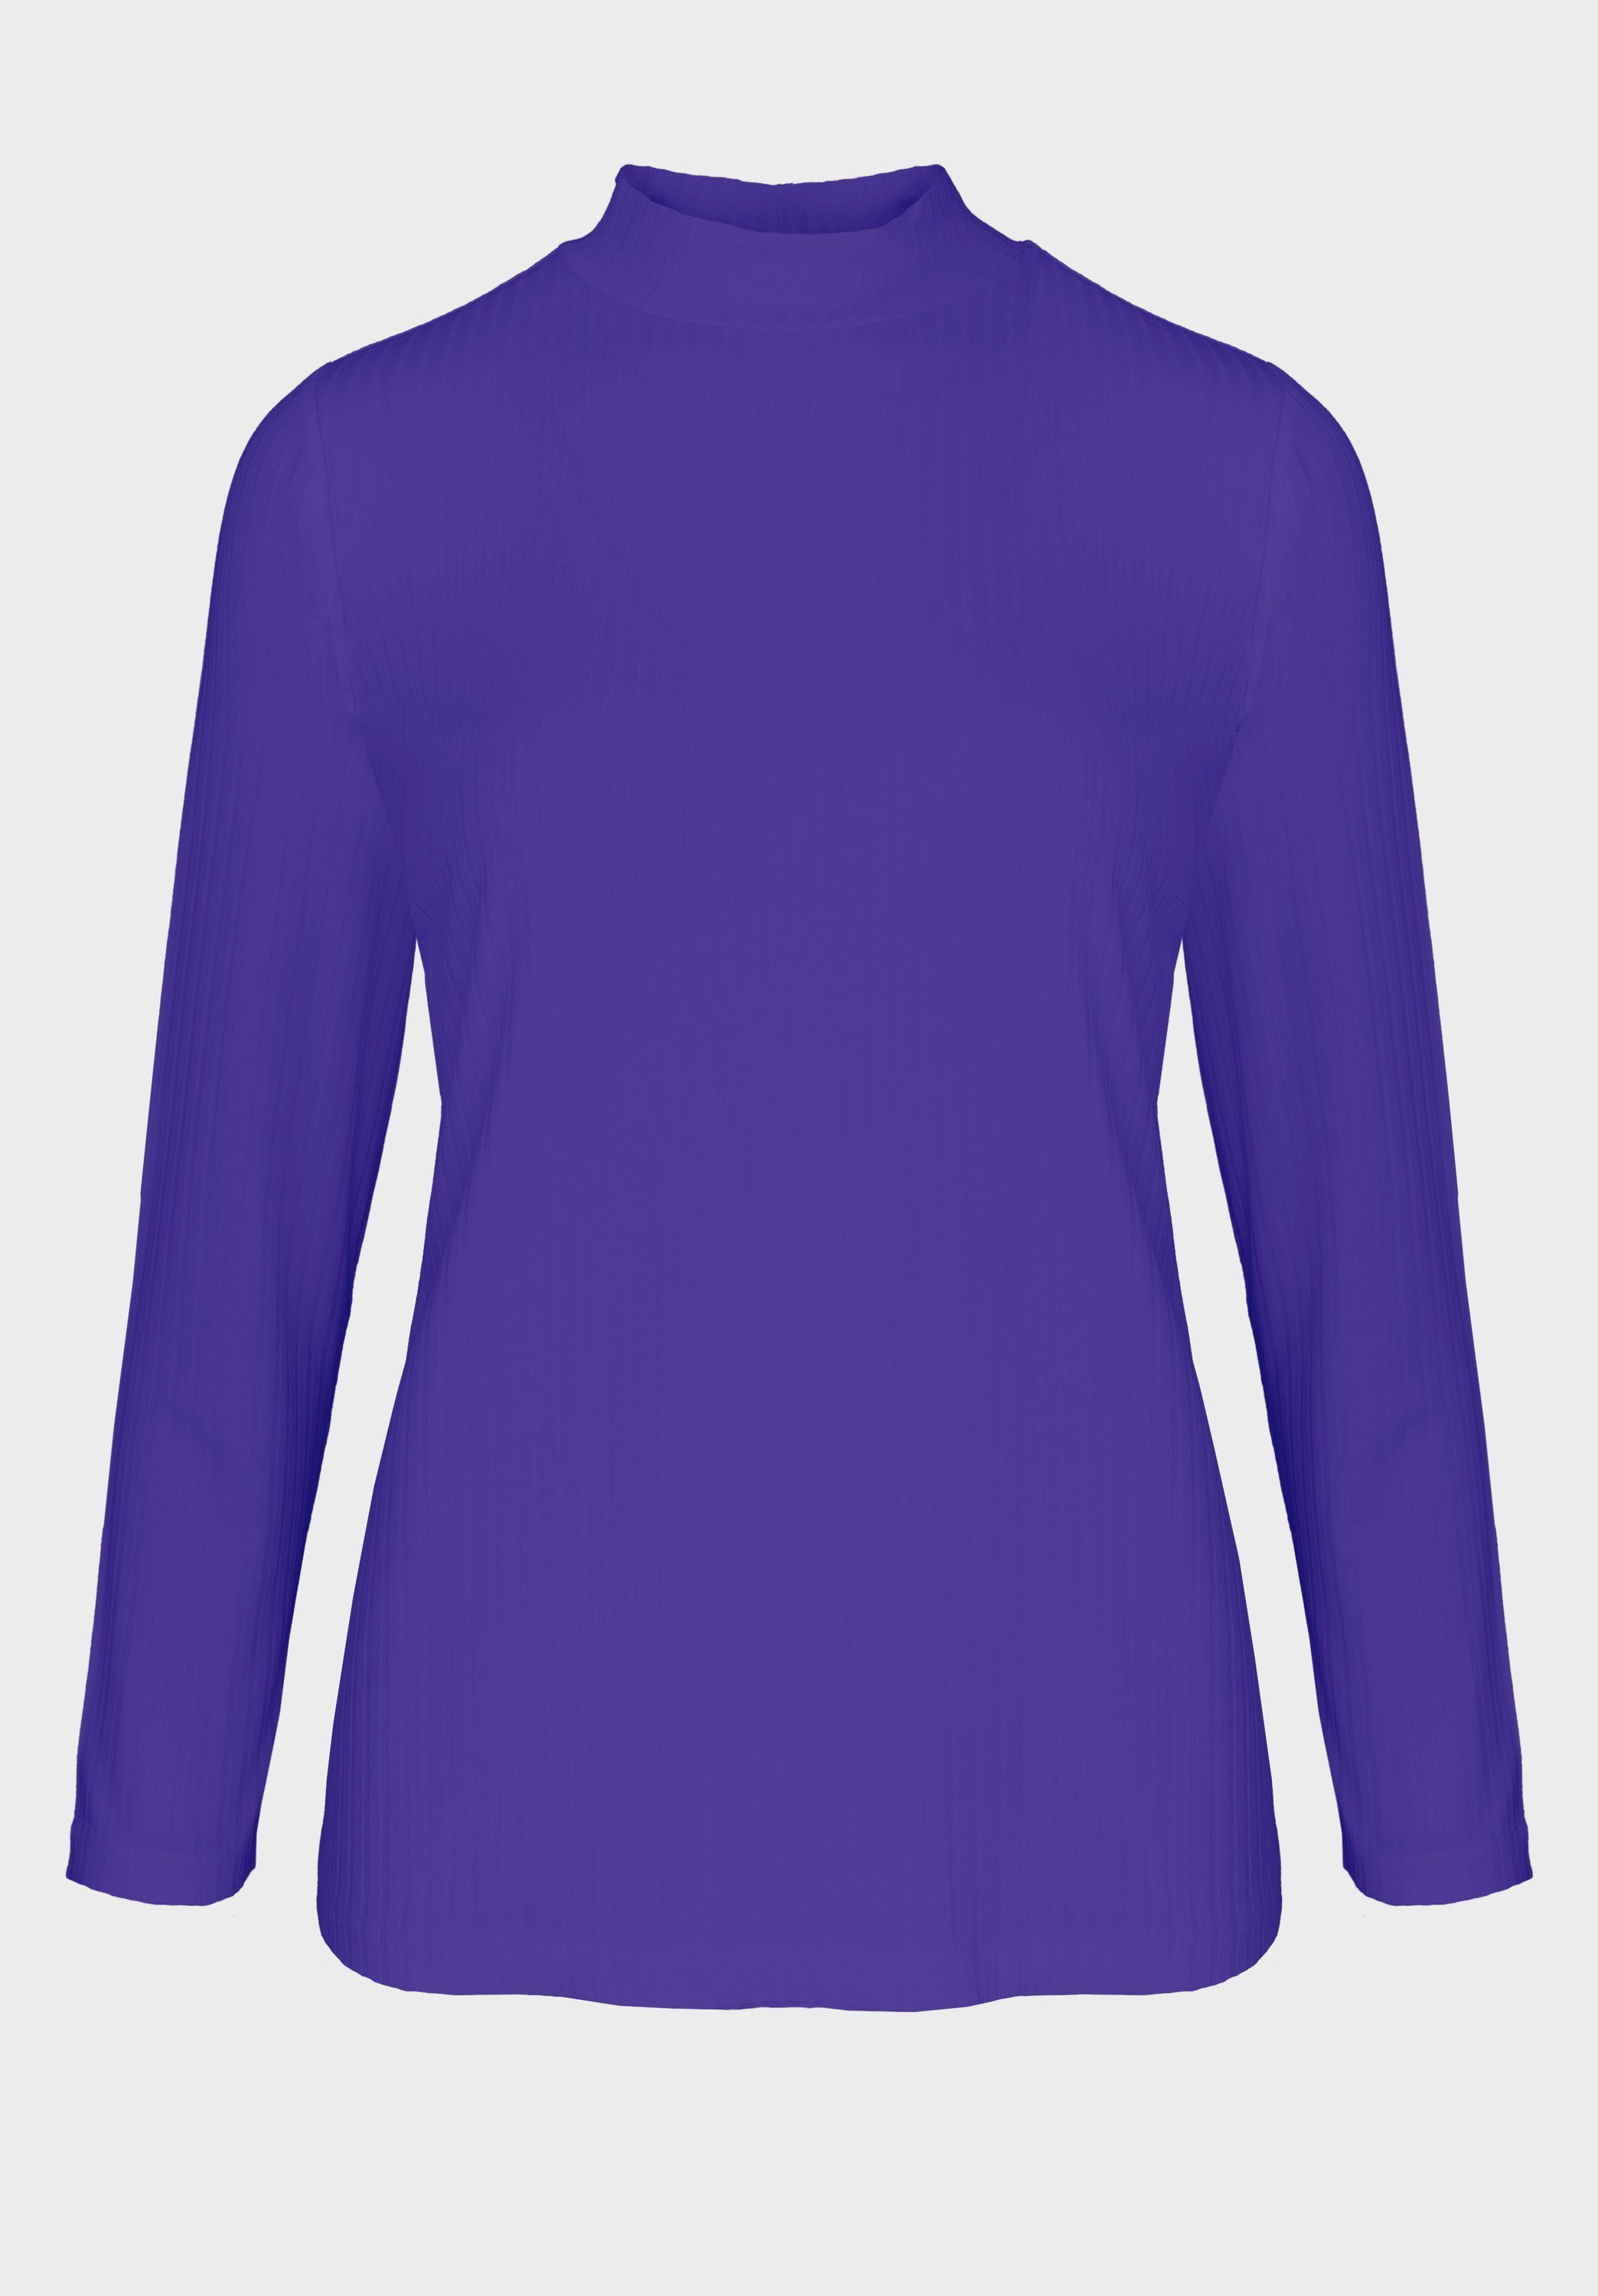 bianca Langarmshirt GRETA mit modernem Turtle-Neck in coolen Trendfarben purple